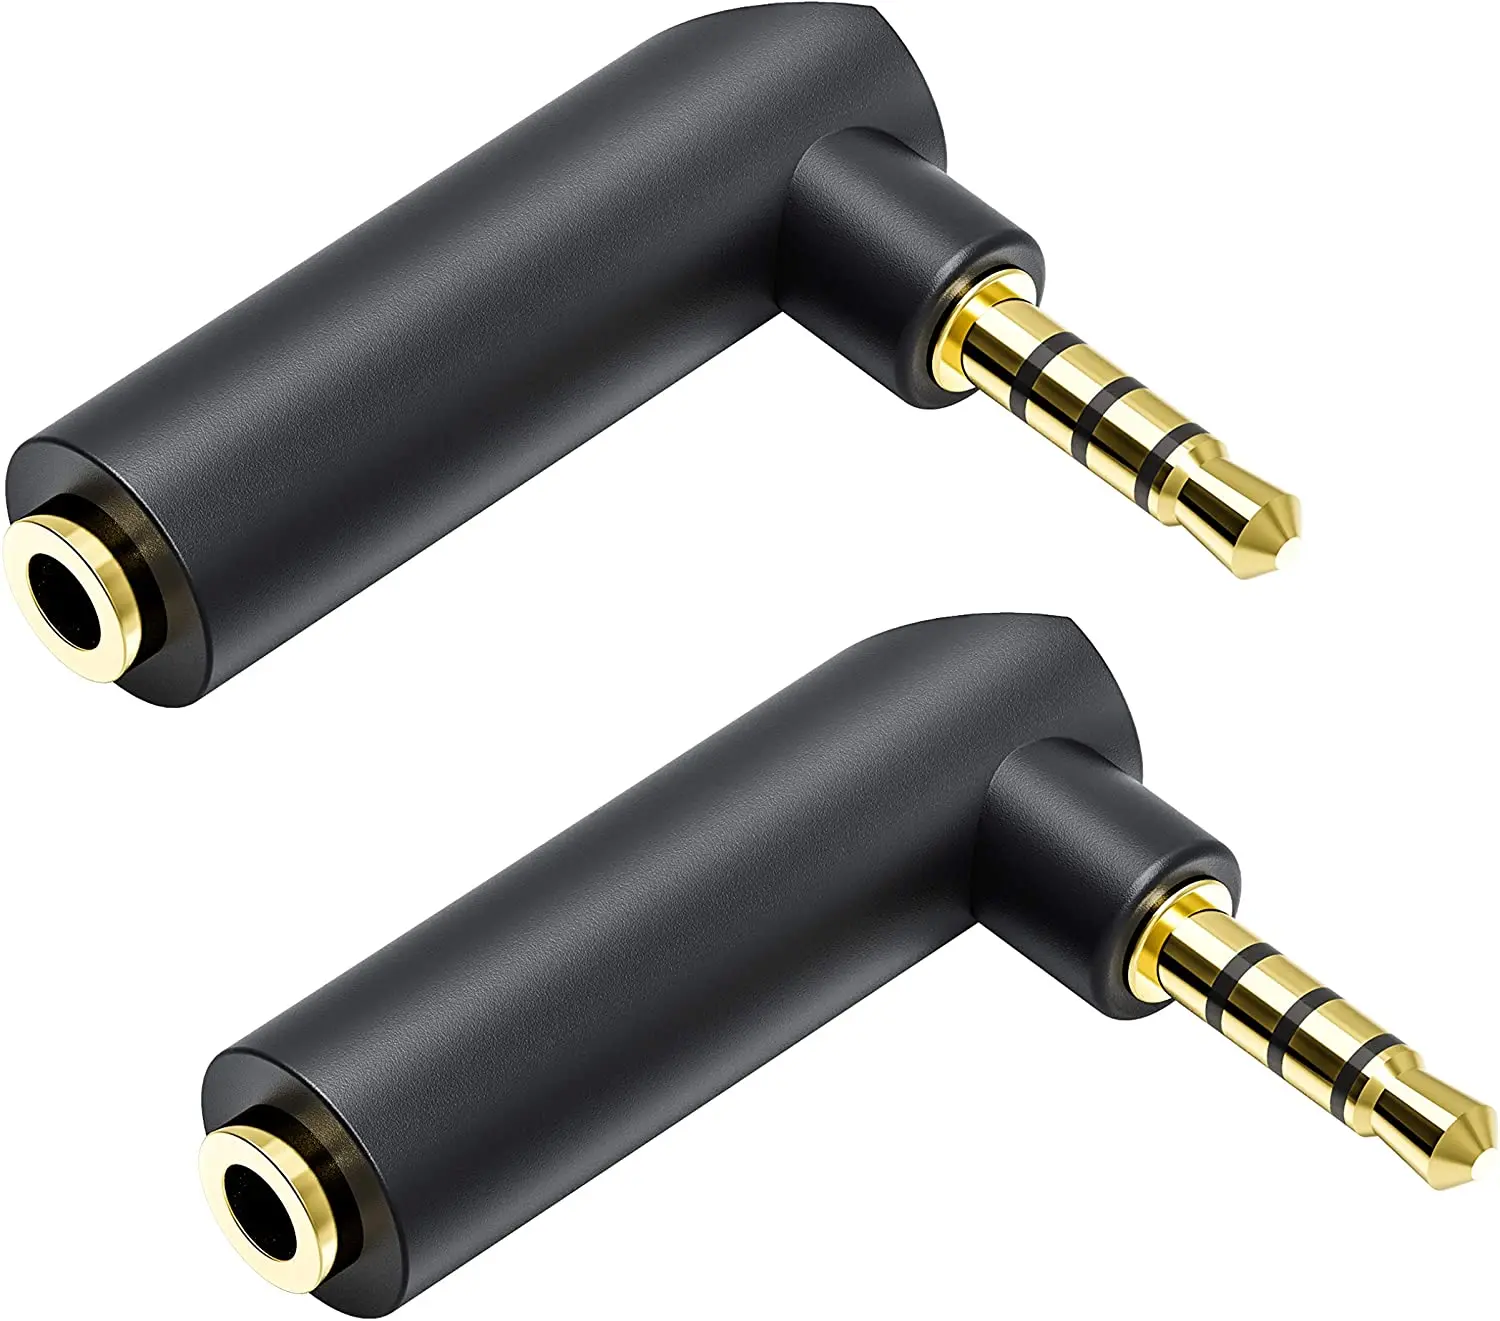 2pcs 2.5mm 4 pole stereo male plug Audio Video TRRS Metal connector AUX CABLE 